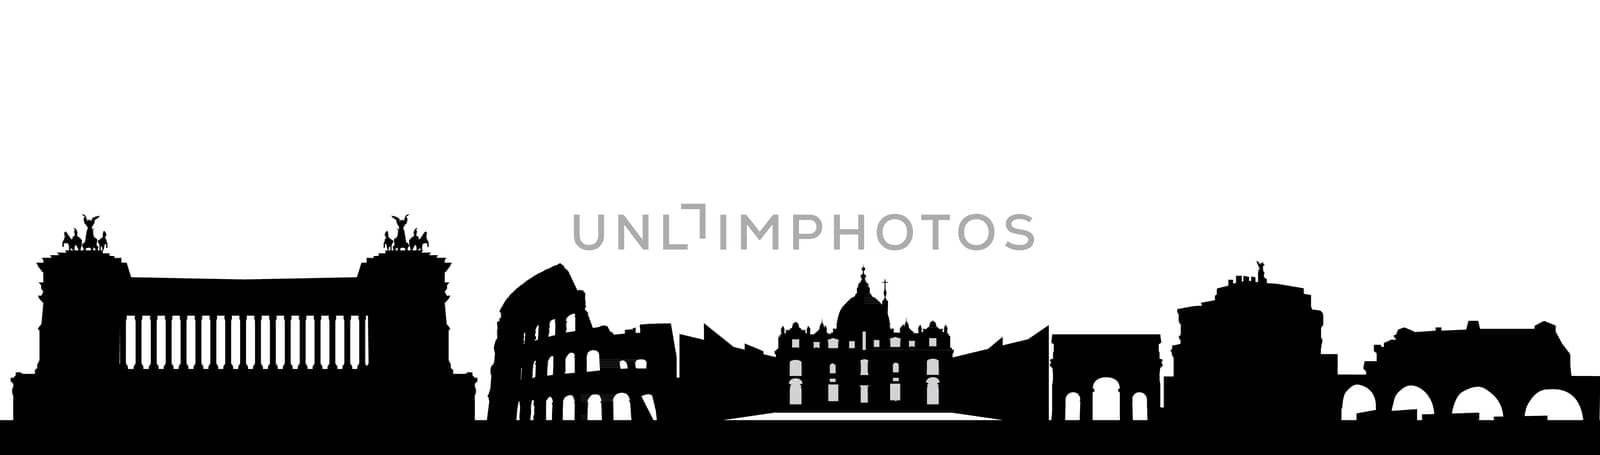 rome skyline by compuinfoto